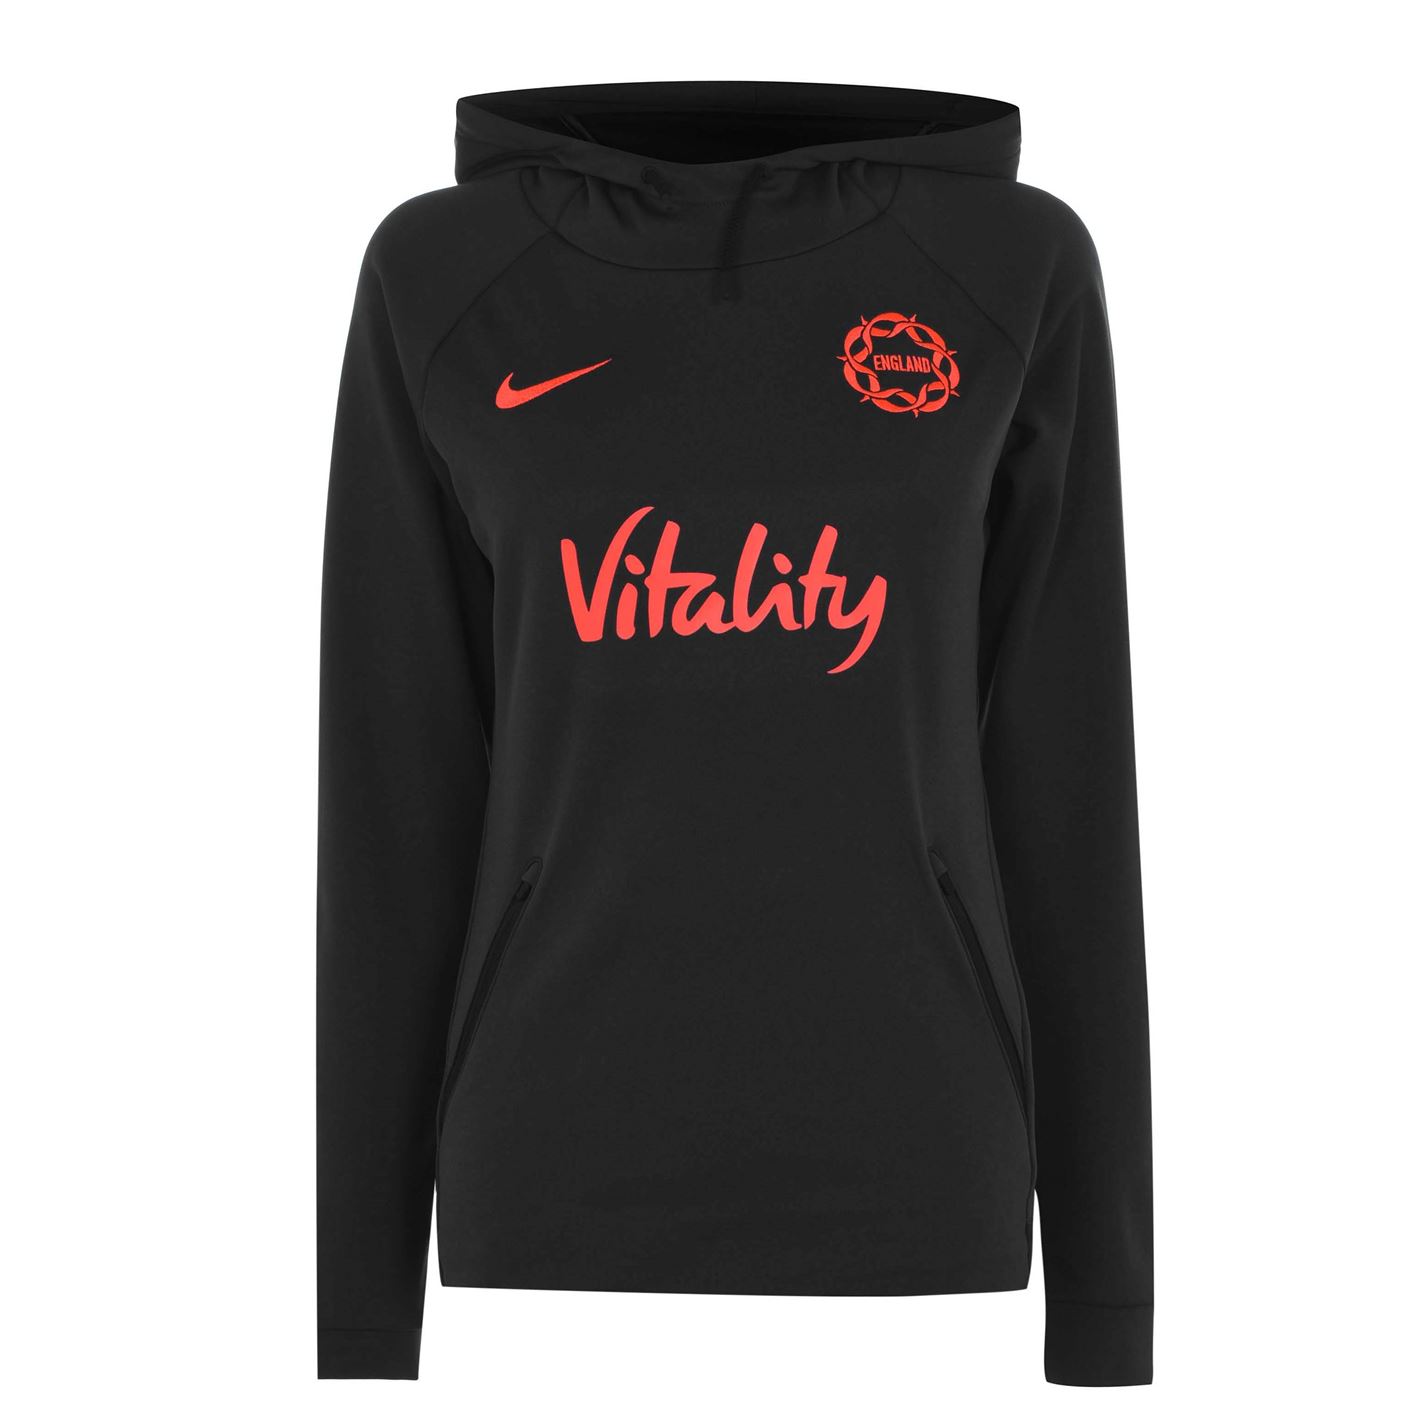 Hanorac Nike Anglia Netball pentru Femei gri rosu